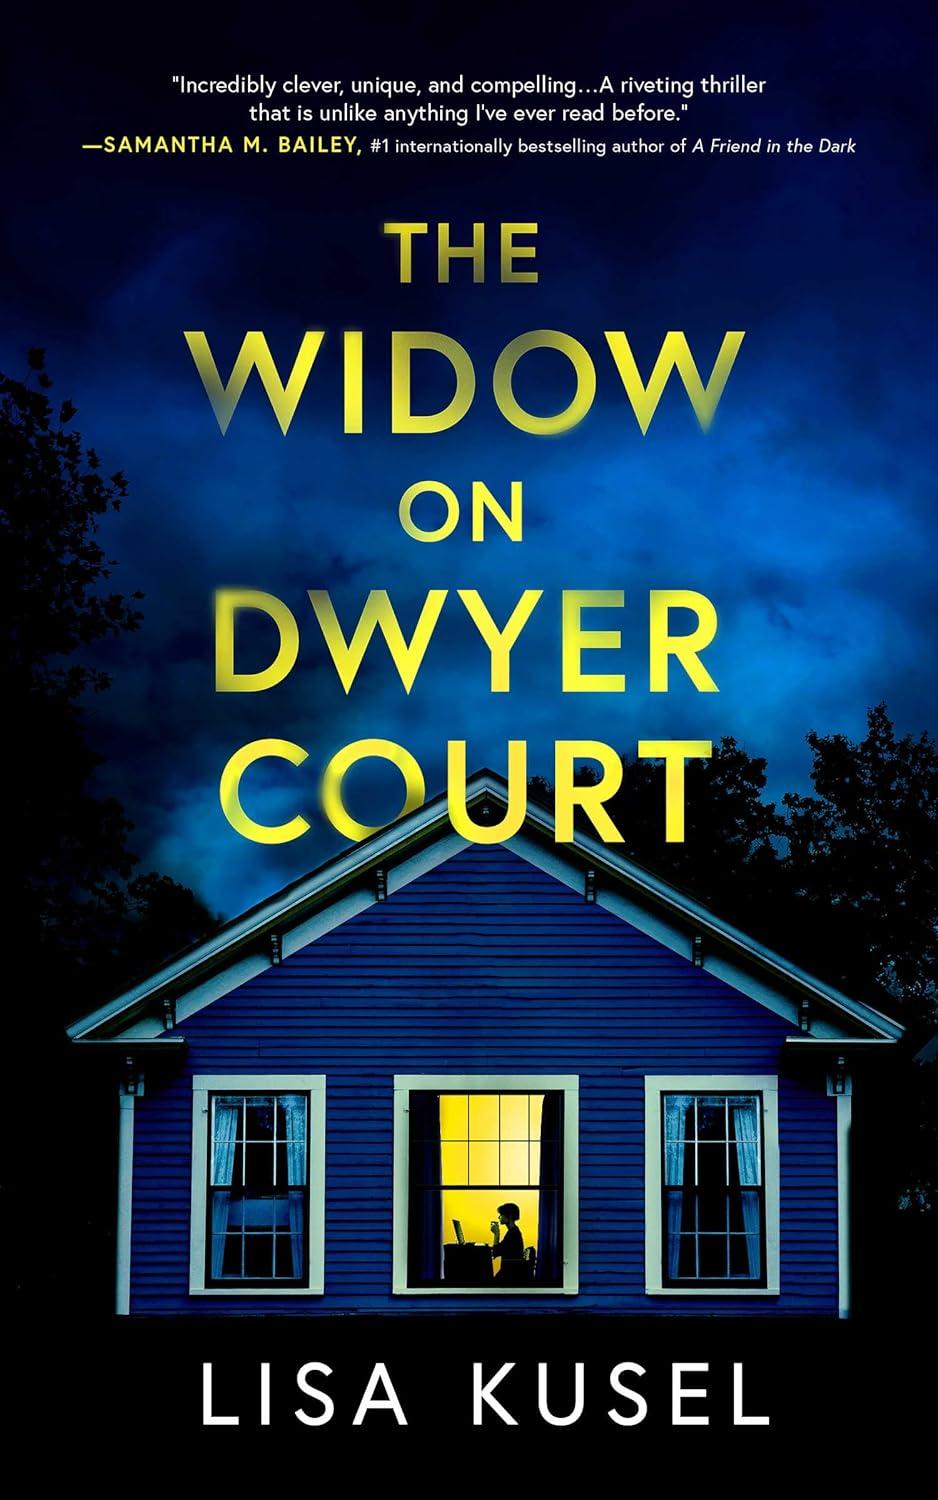 The Widow on Dwyer Court